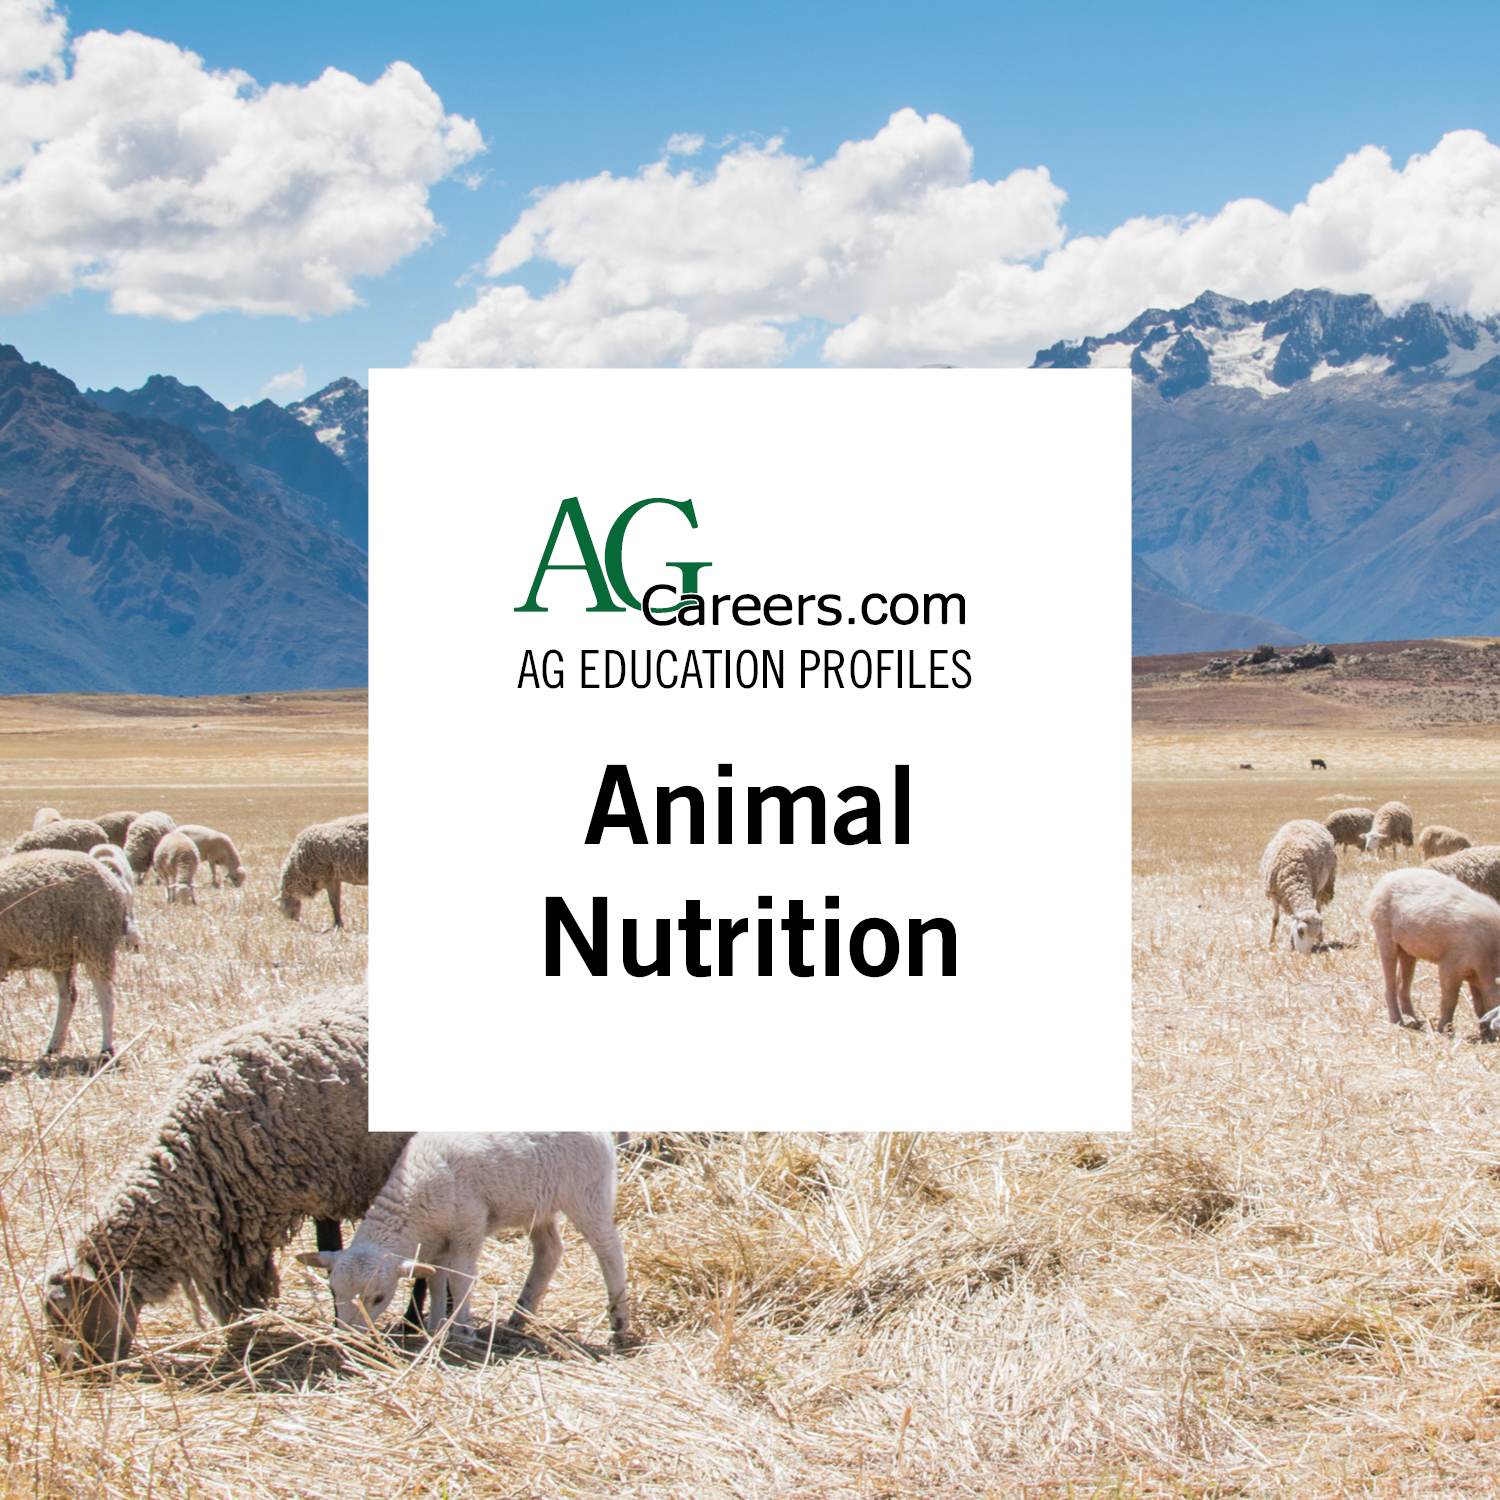 Animal Nutrition | Education Profile | AgCareers.com